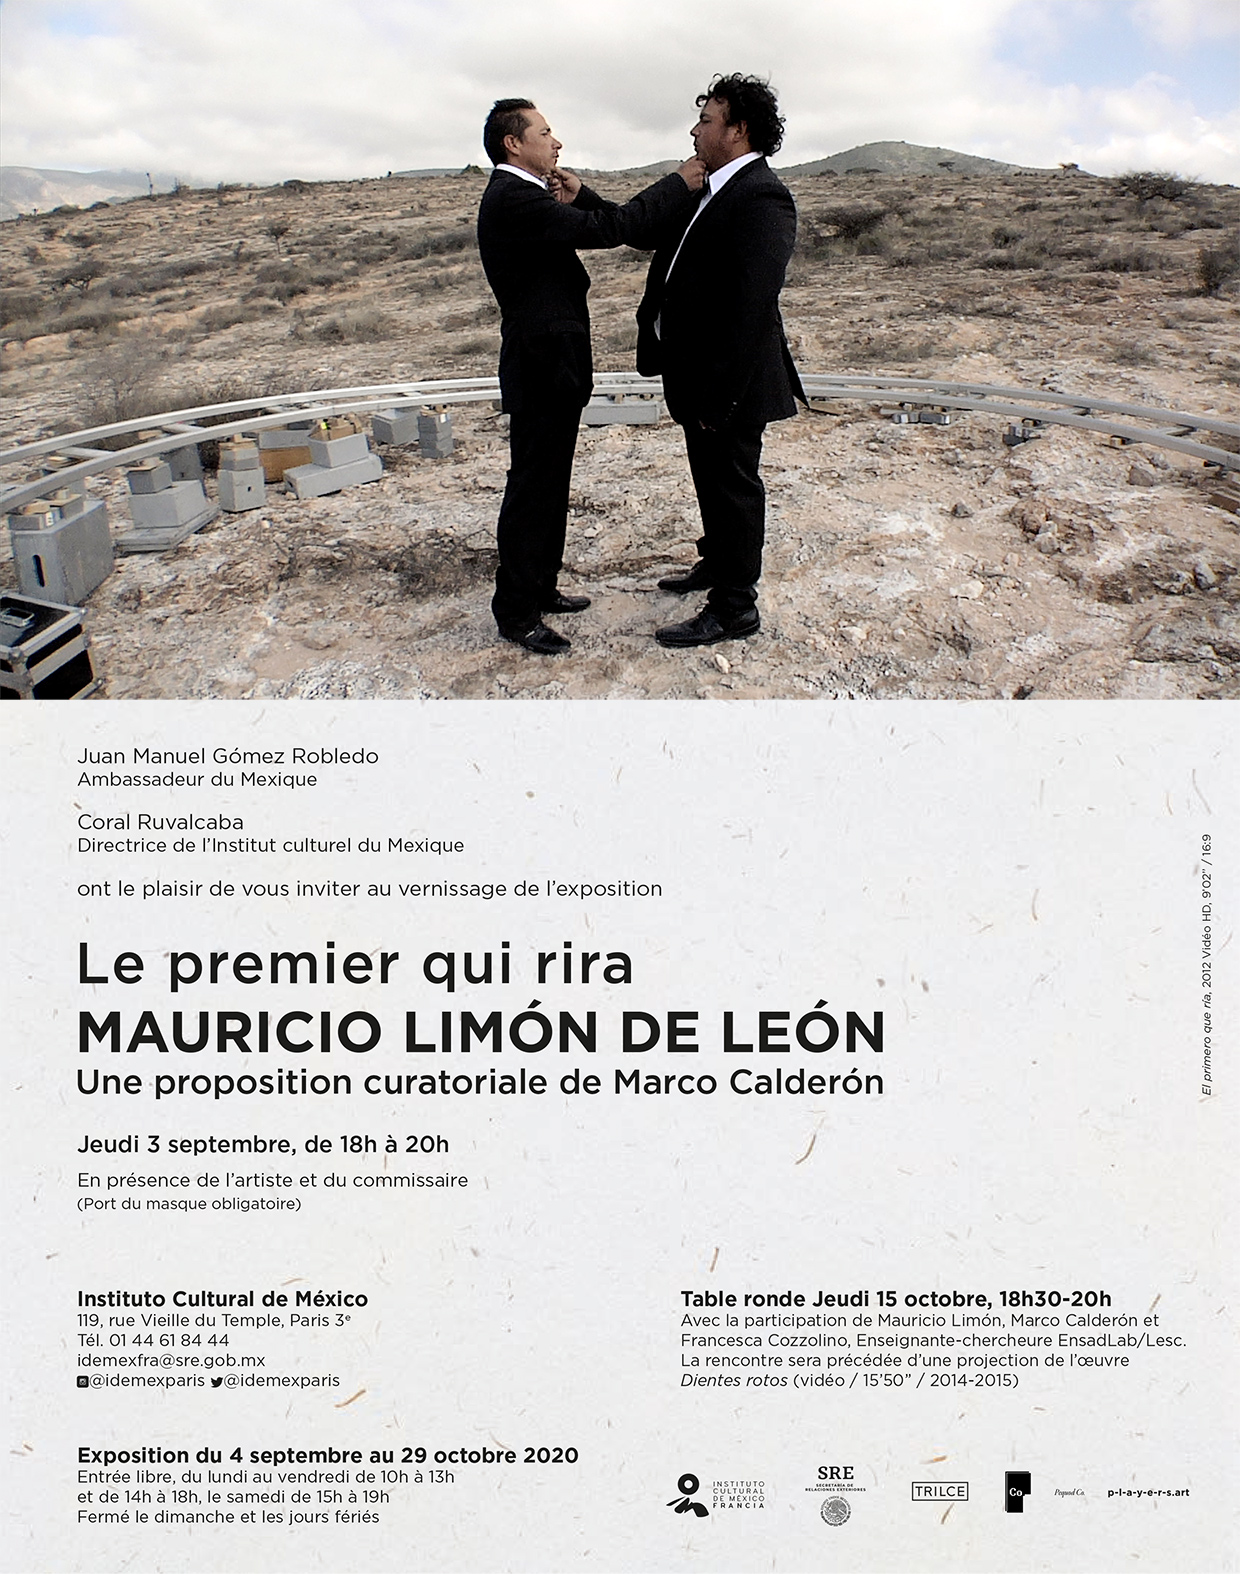 Mauricio Limon exhibition in Paris